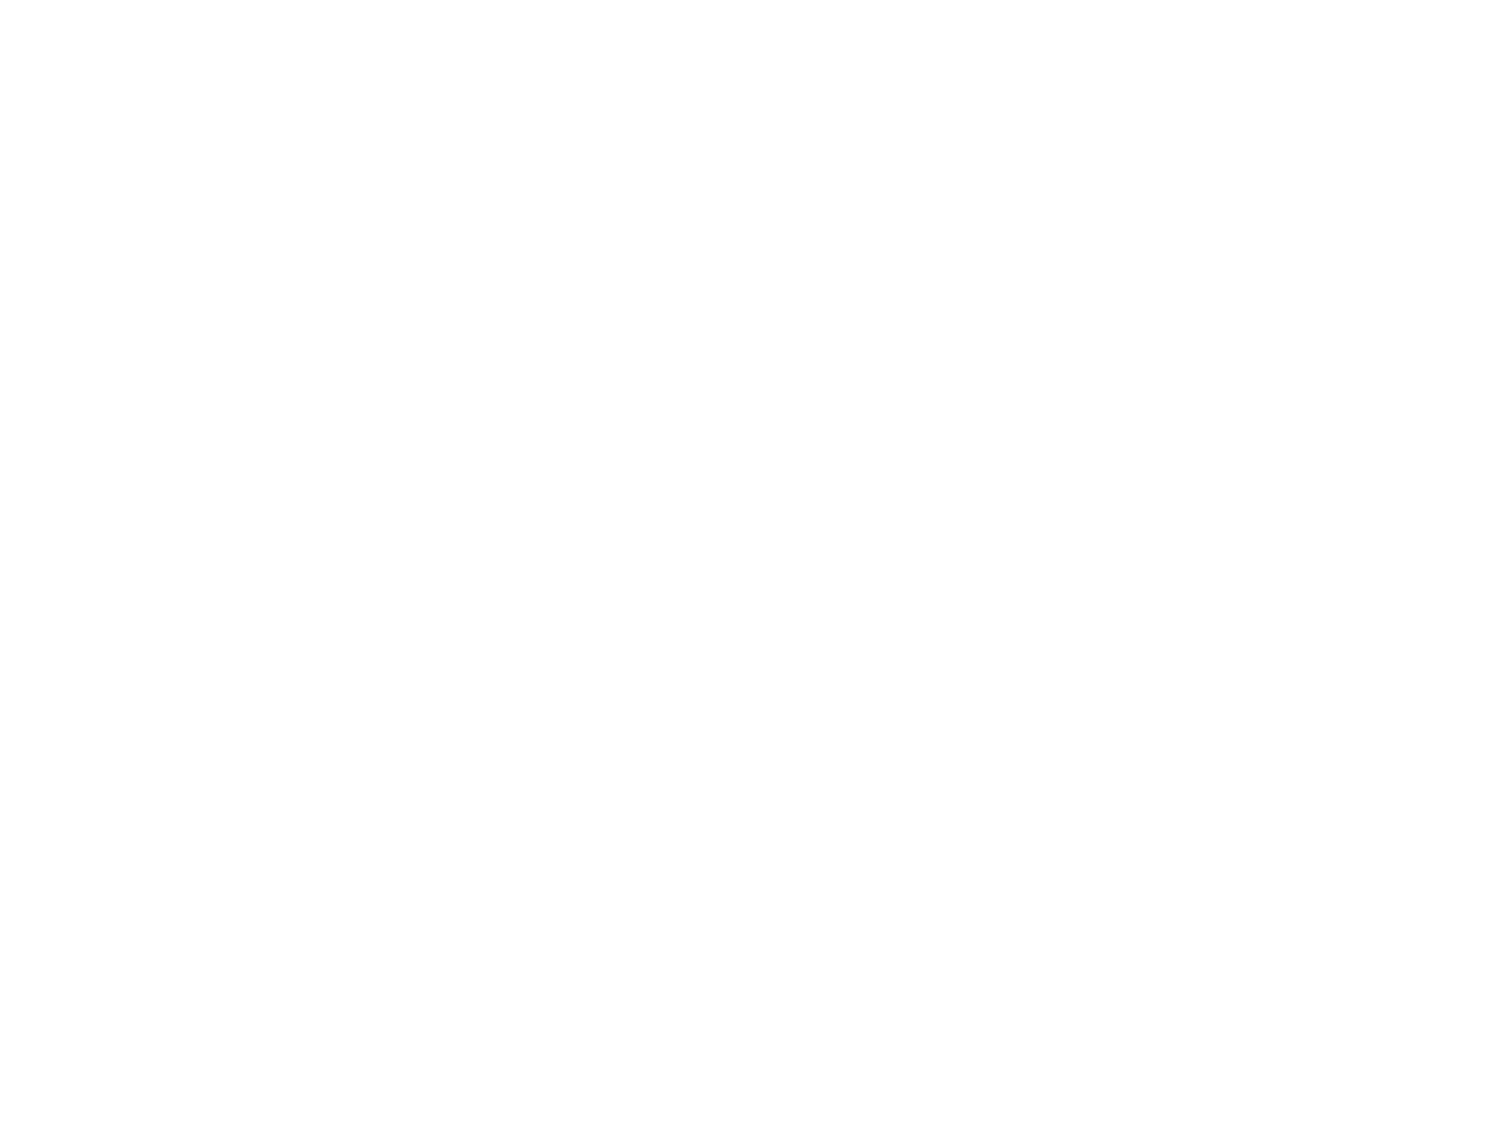 South Shore Community Church